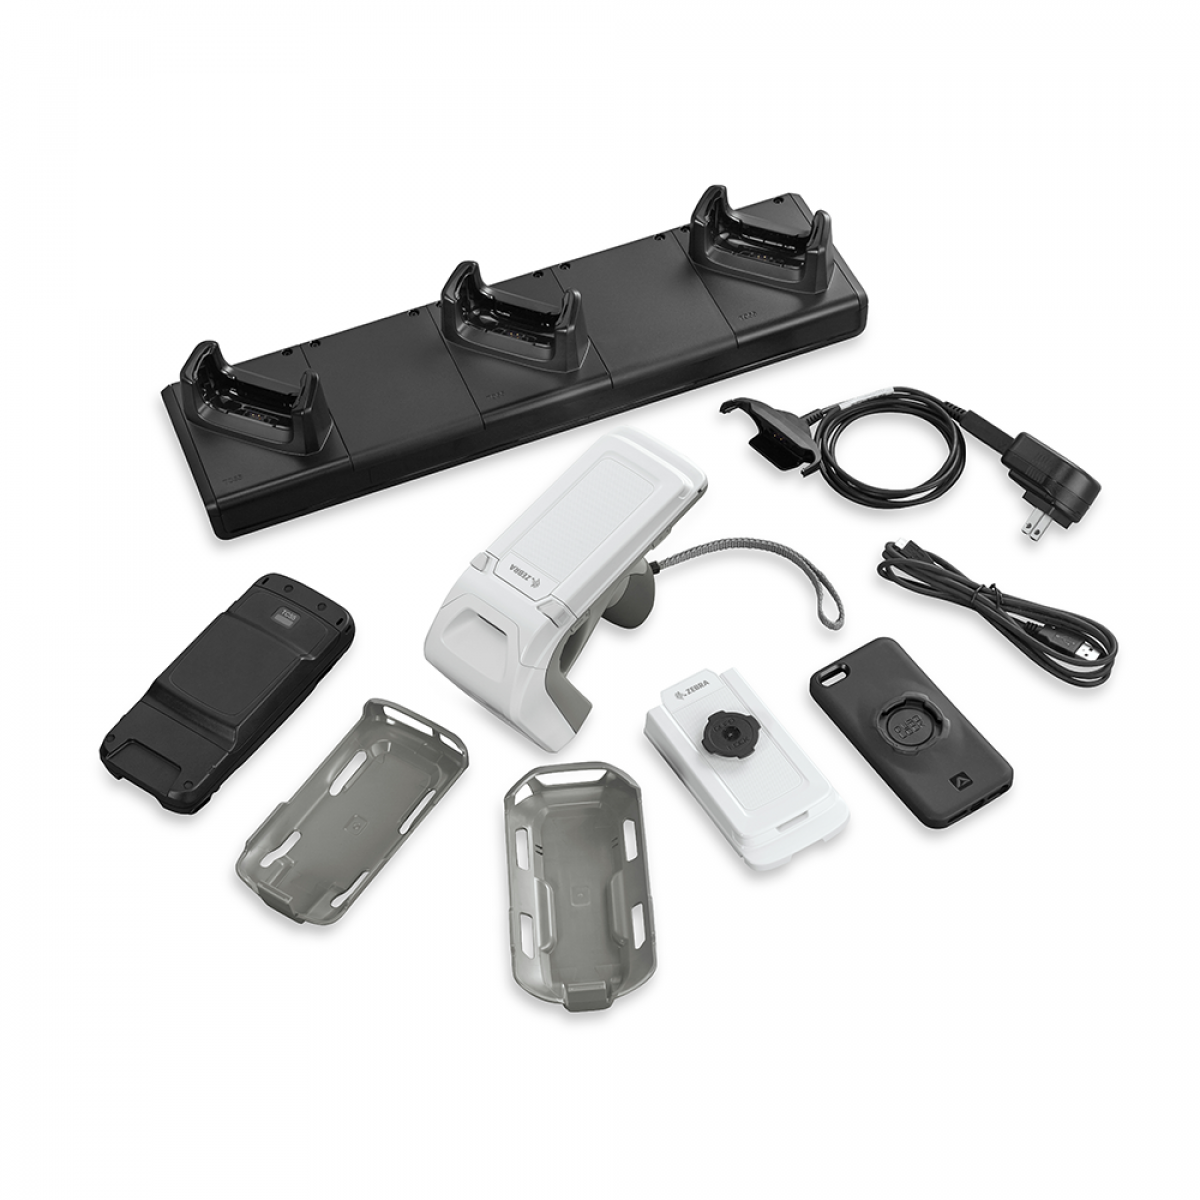 Accessories for Zebra RFD8500 UHF RFID sled